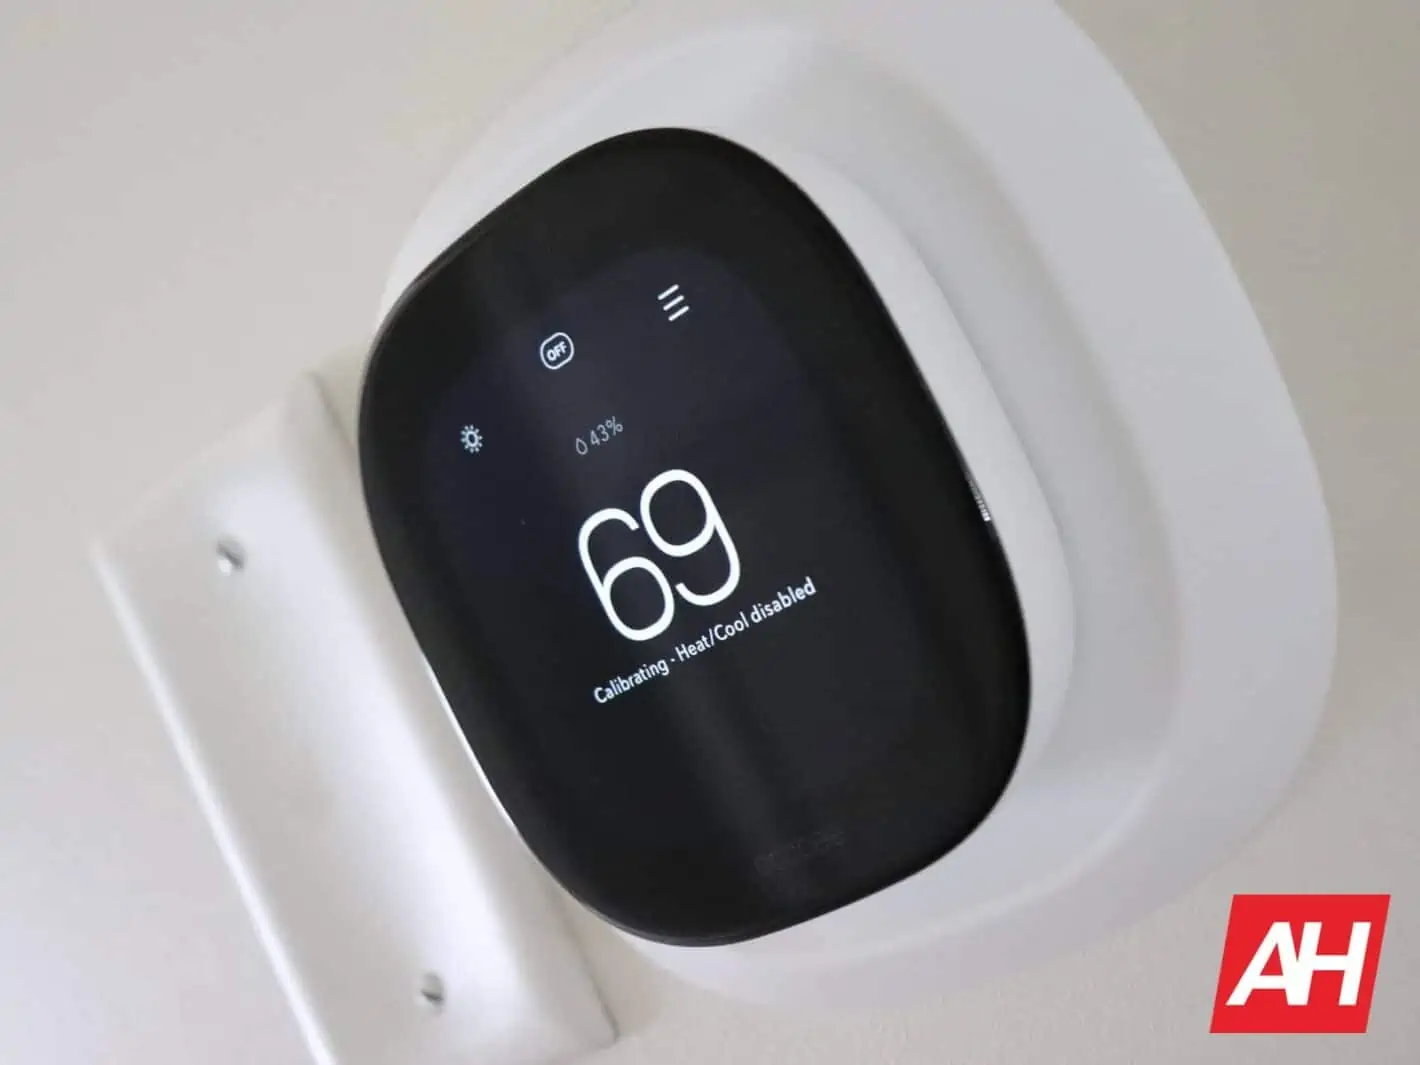 06 ecobee smart thermostat enhanced review final DG AH 2022